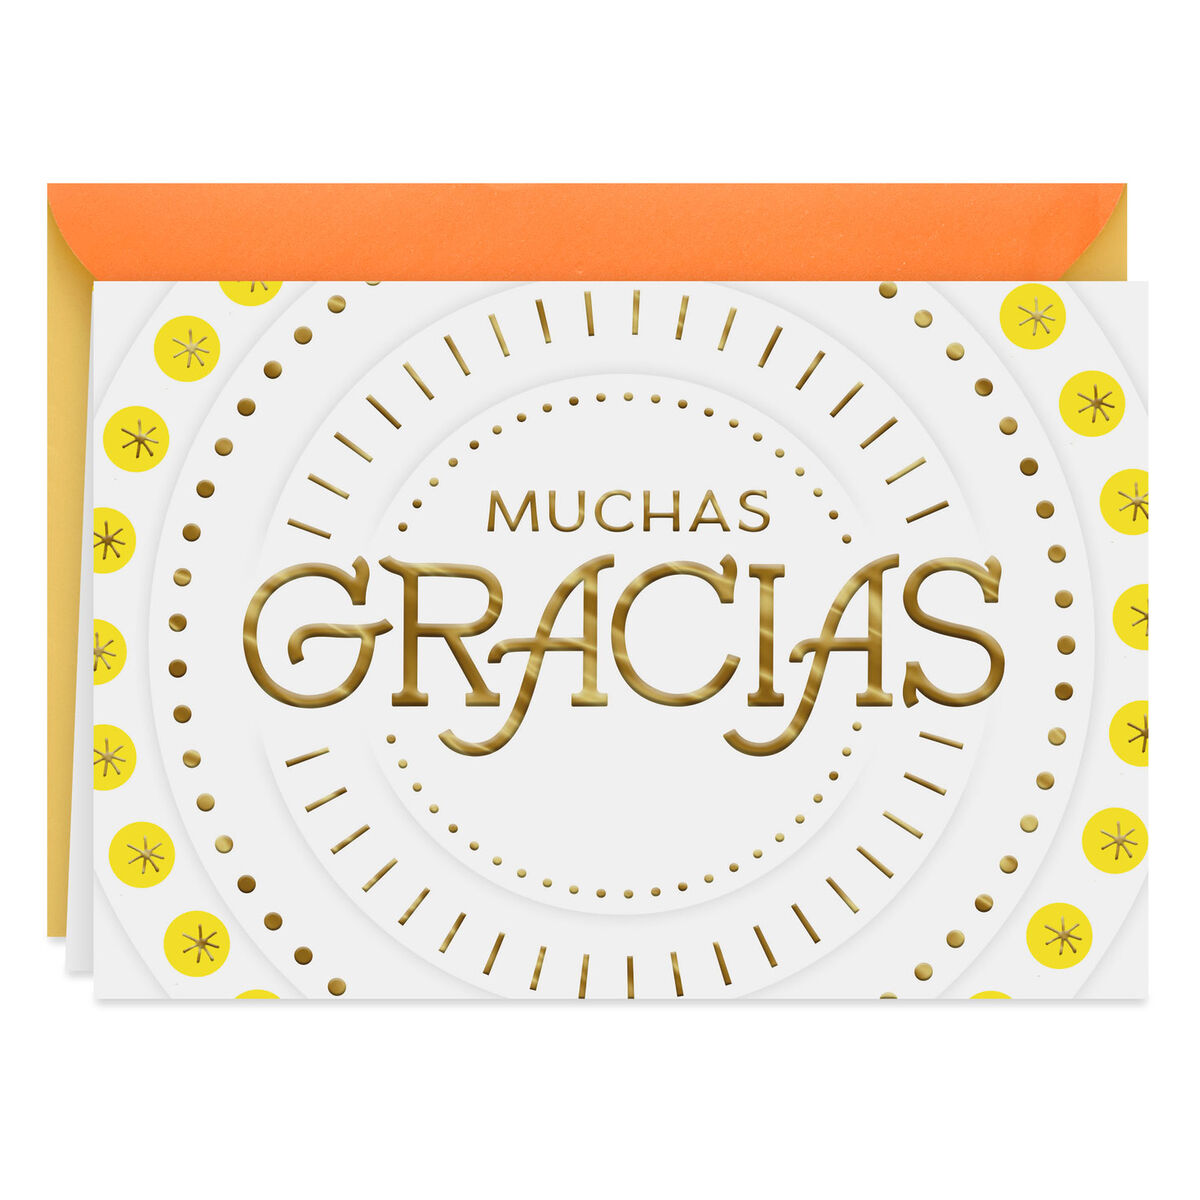 muchas-gracias-spanish-language-thank-you-card-greeting-cards-hallmark